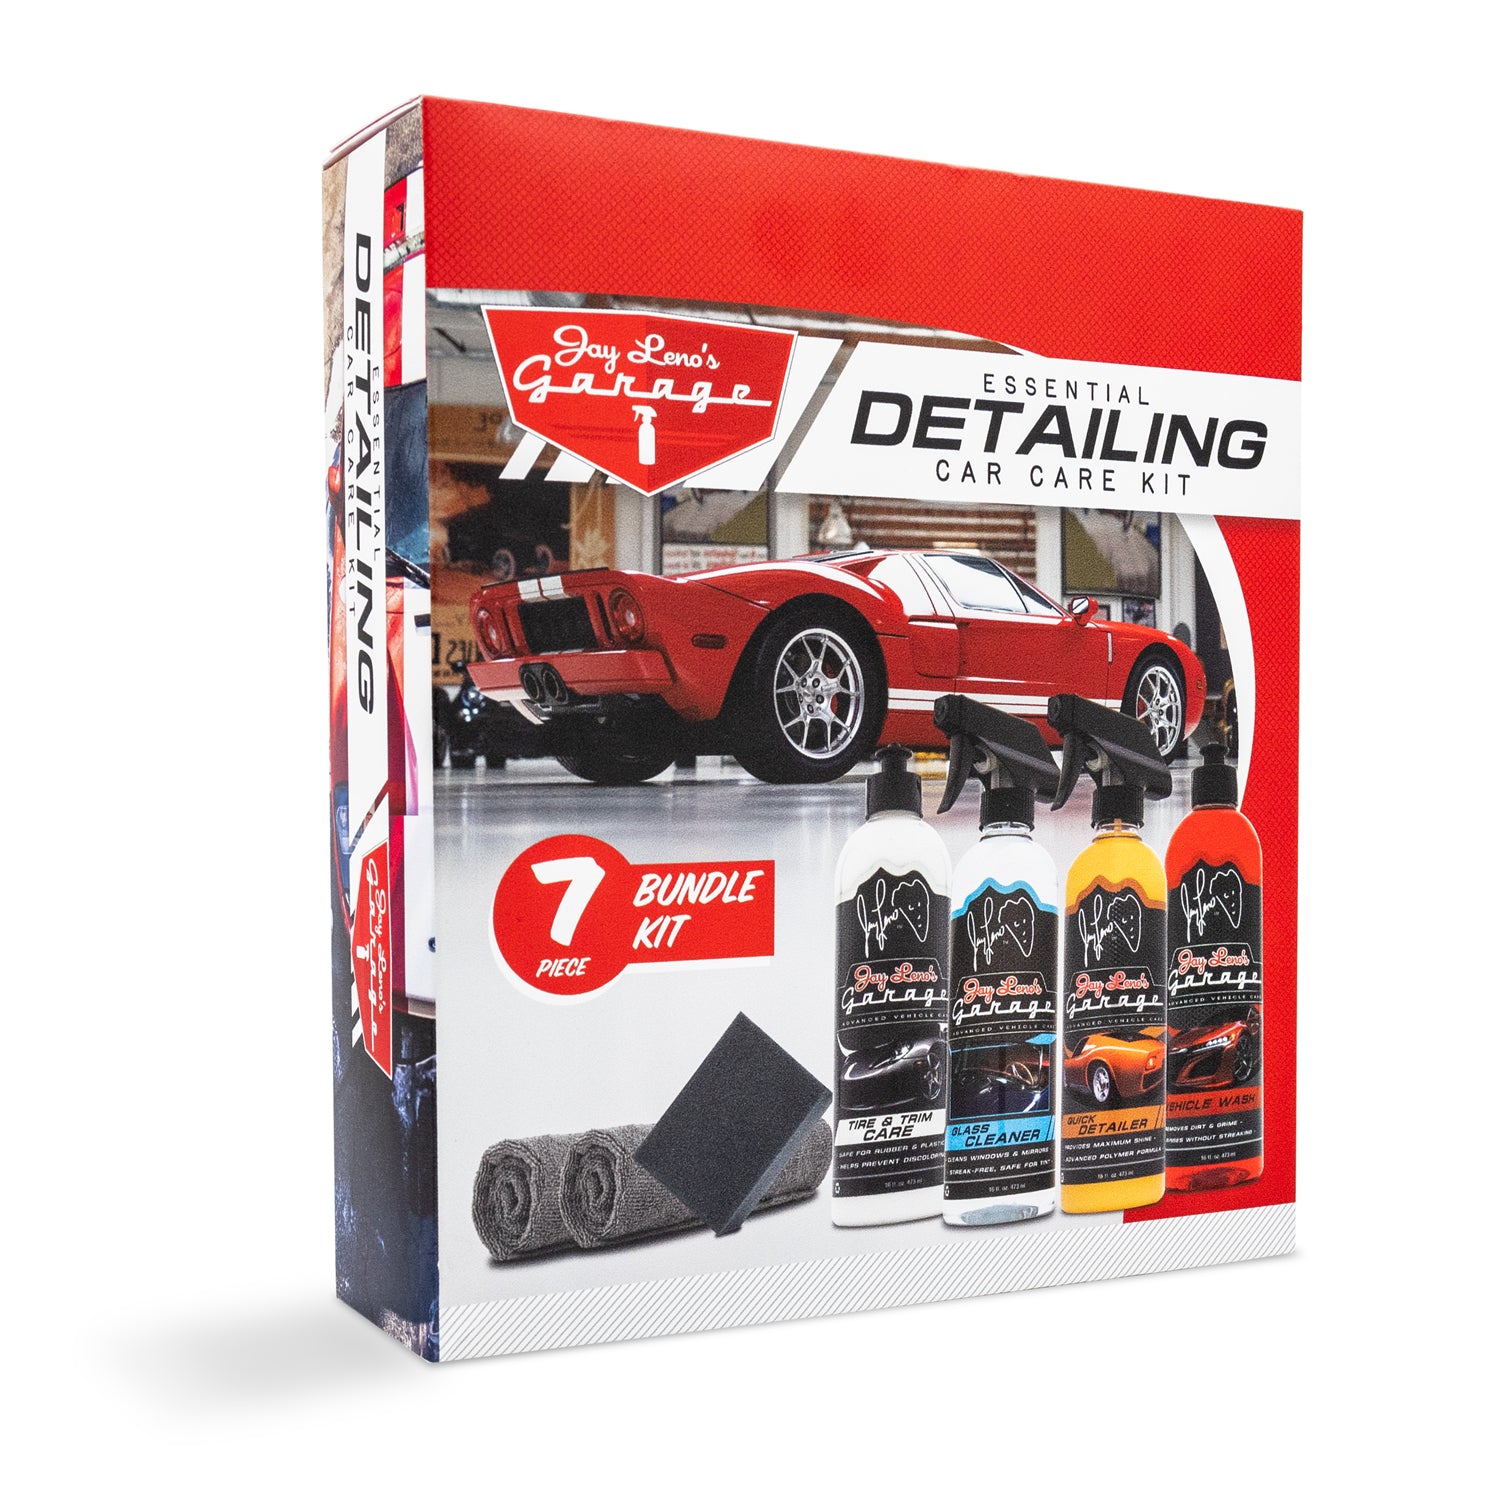 Essentials Detailing Car Care Kit